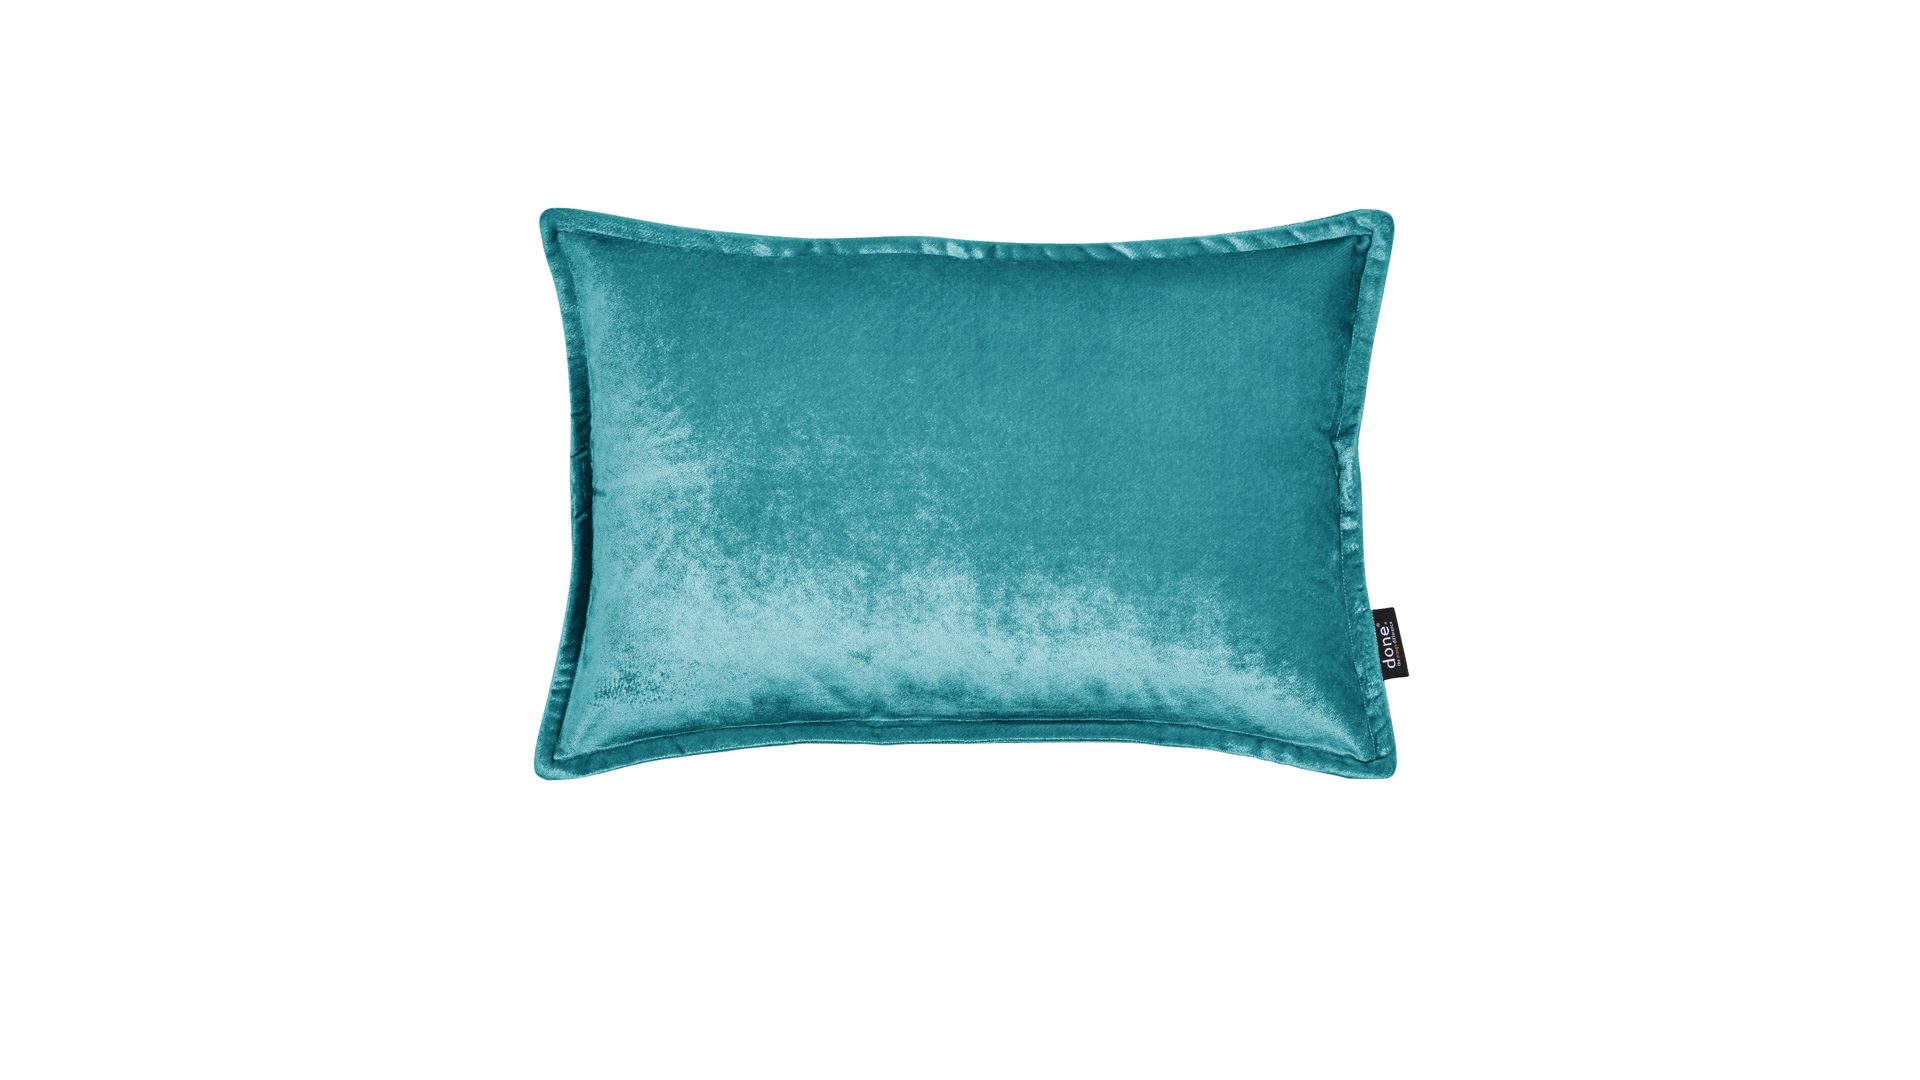 Kissenbezug /-hülle Done by karabel home company aus Stoff in Blau Done Kissenhülle Cushion Glam aquafarbener Samt - ca. 40 x 60 cm